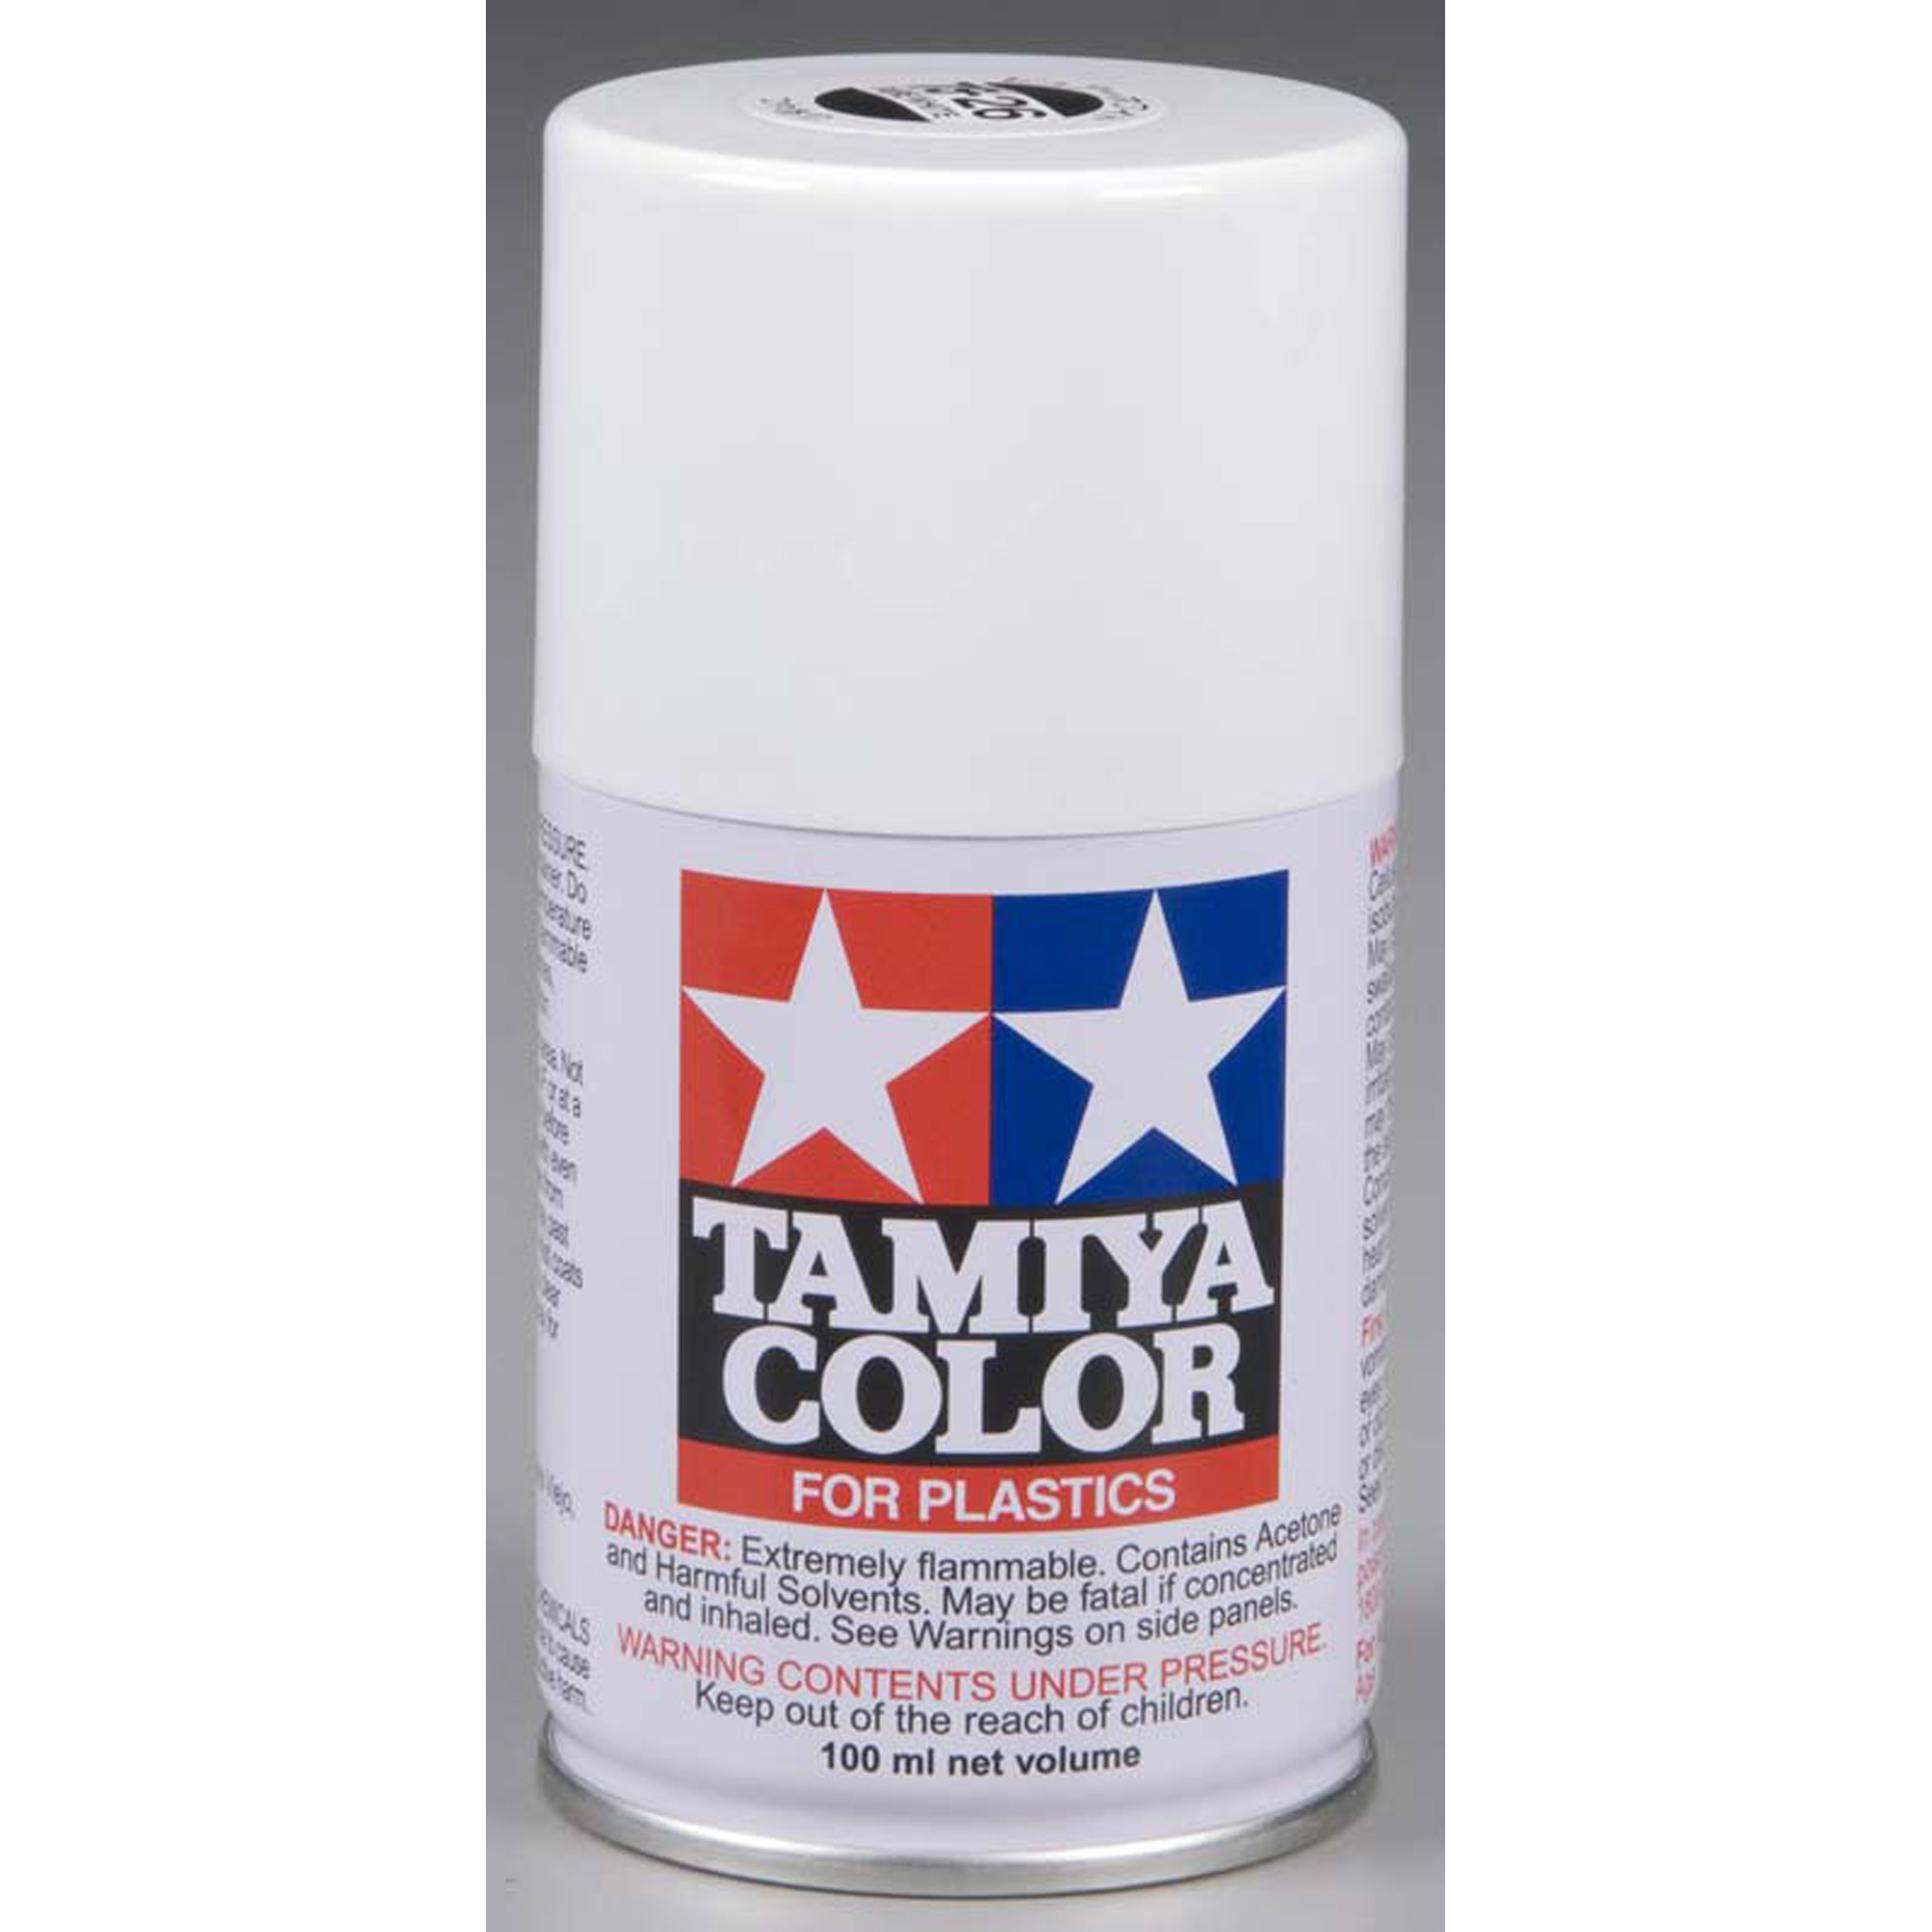 Tamiya 85026 TS-26 Pure White Spray Paint / Tamiya USA